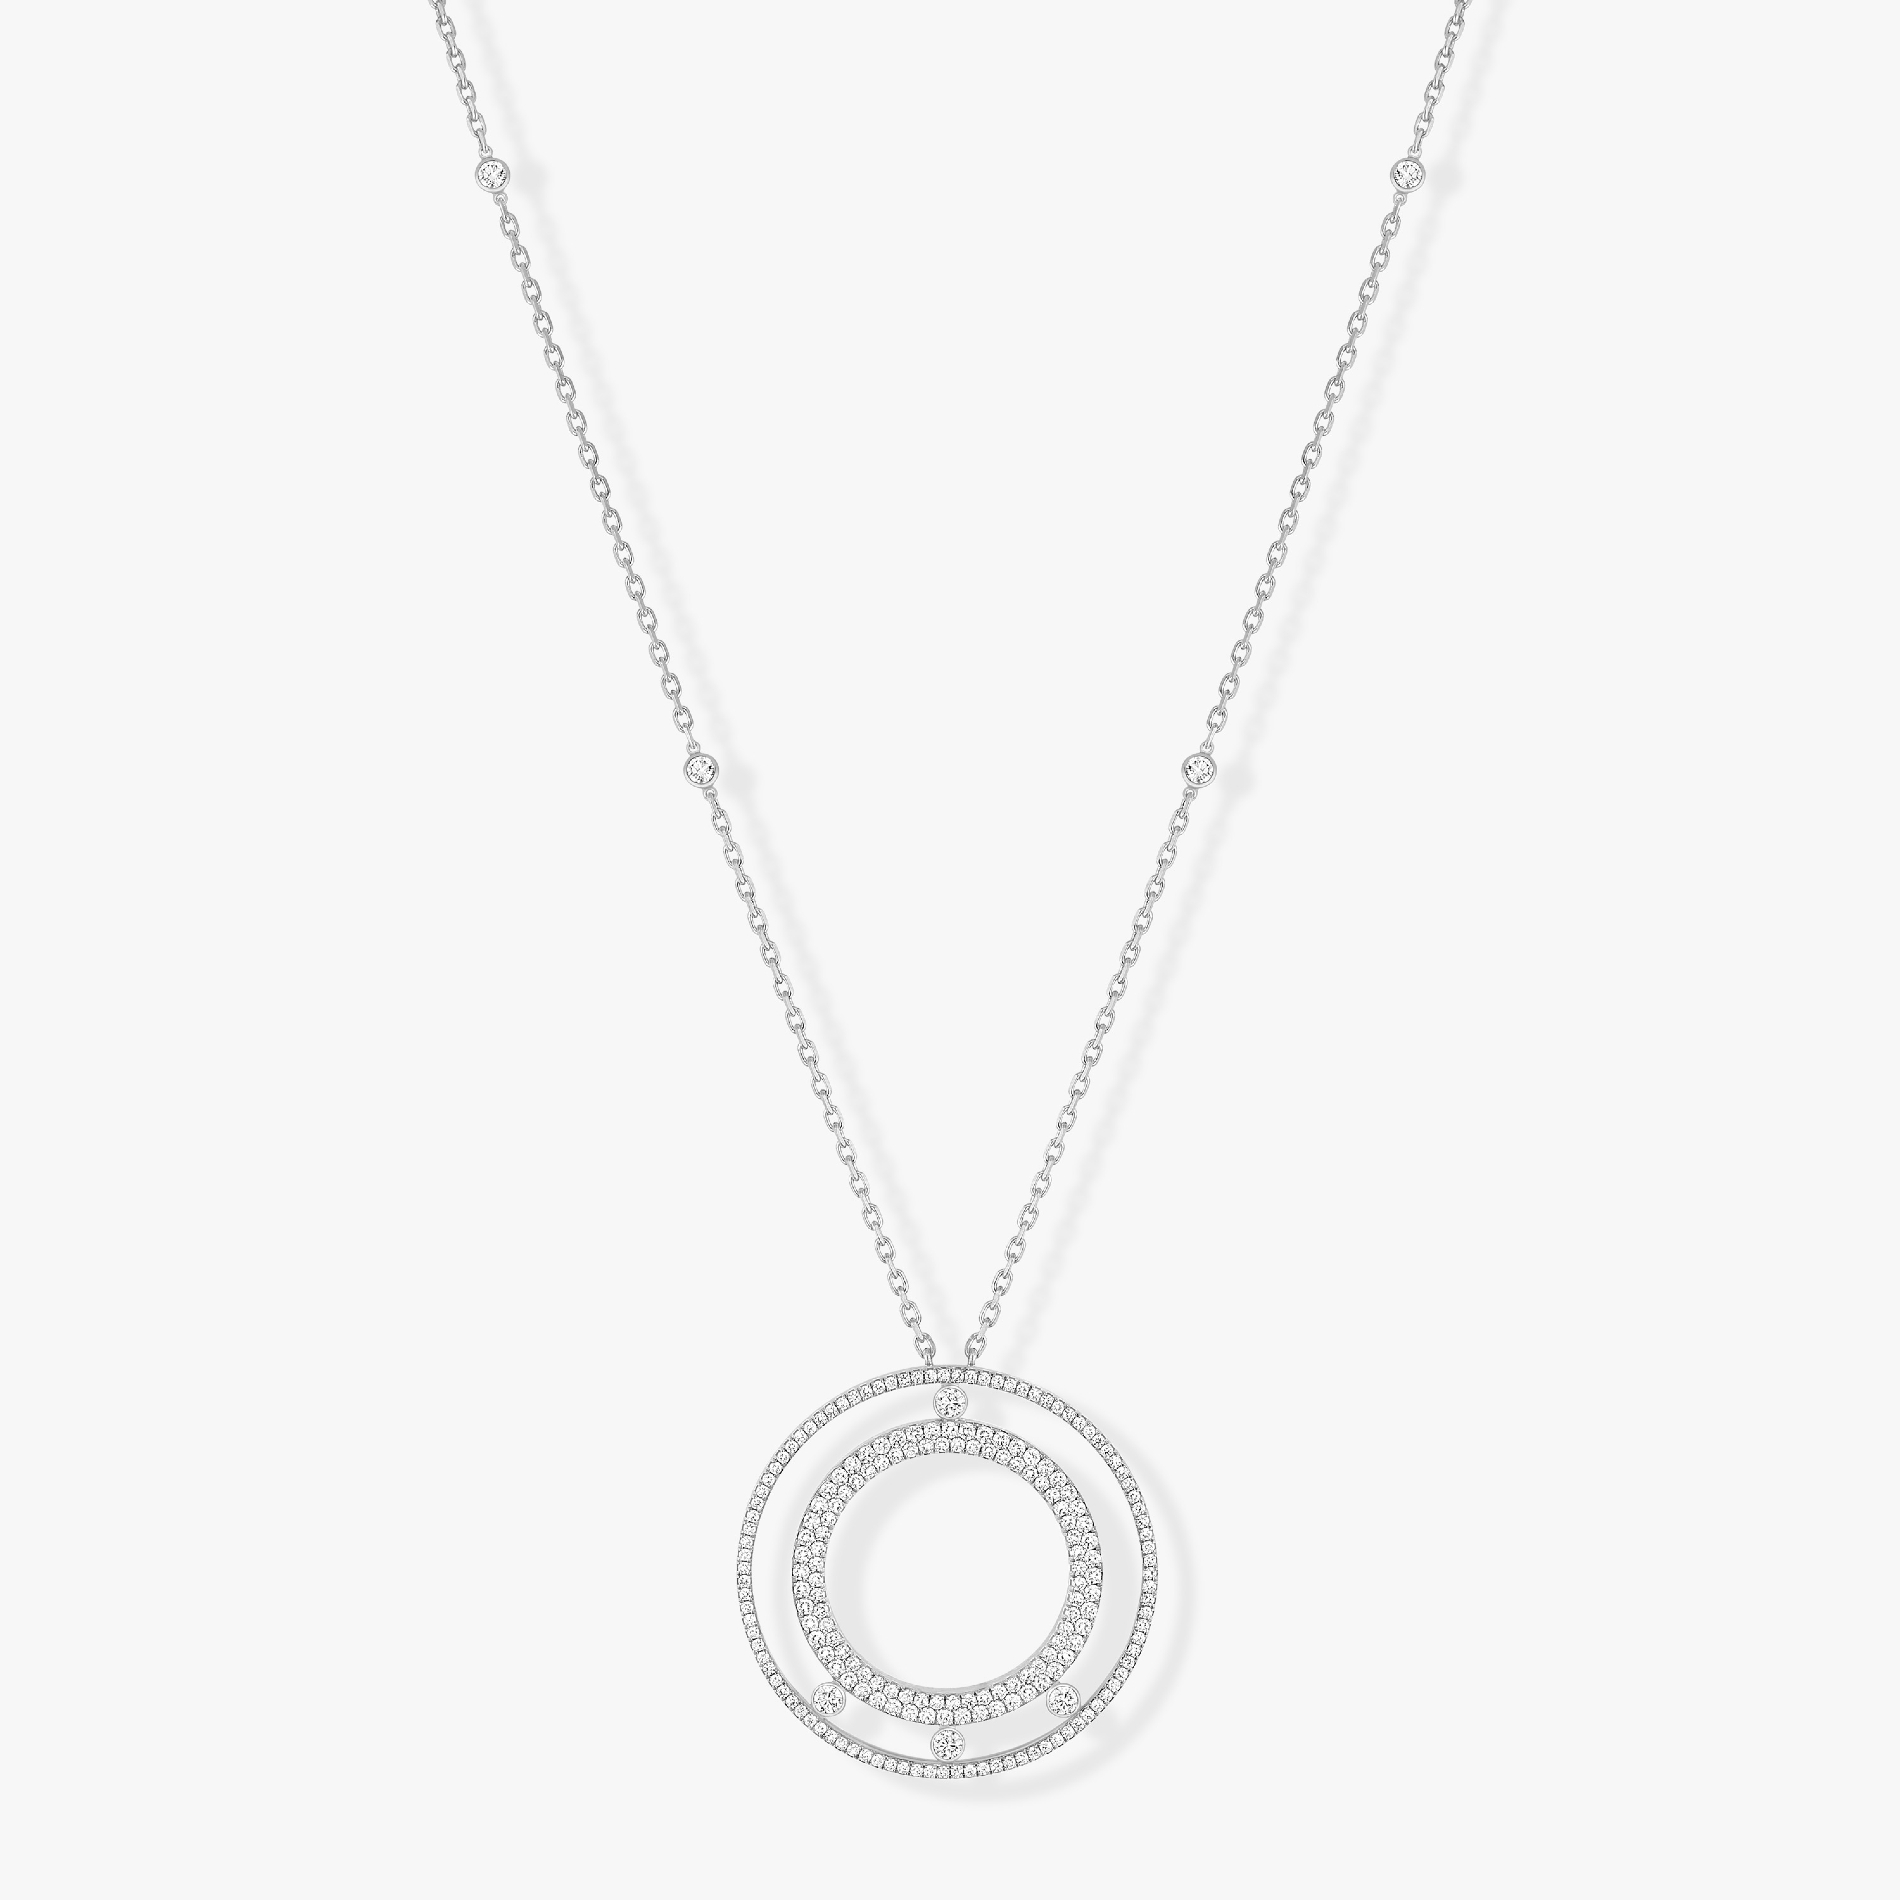 Necklace For Her White Gold Diamond Move Romane Long Diamond Pavé Necklace 11317-WG